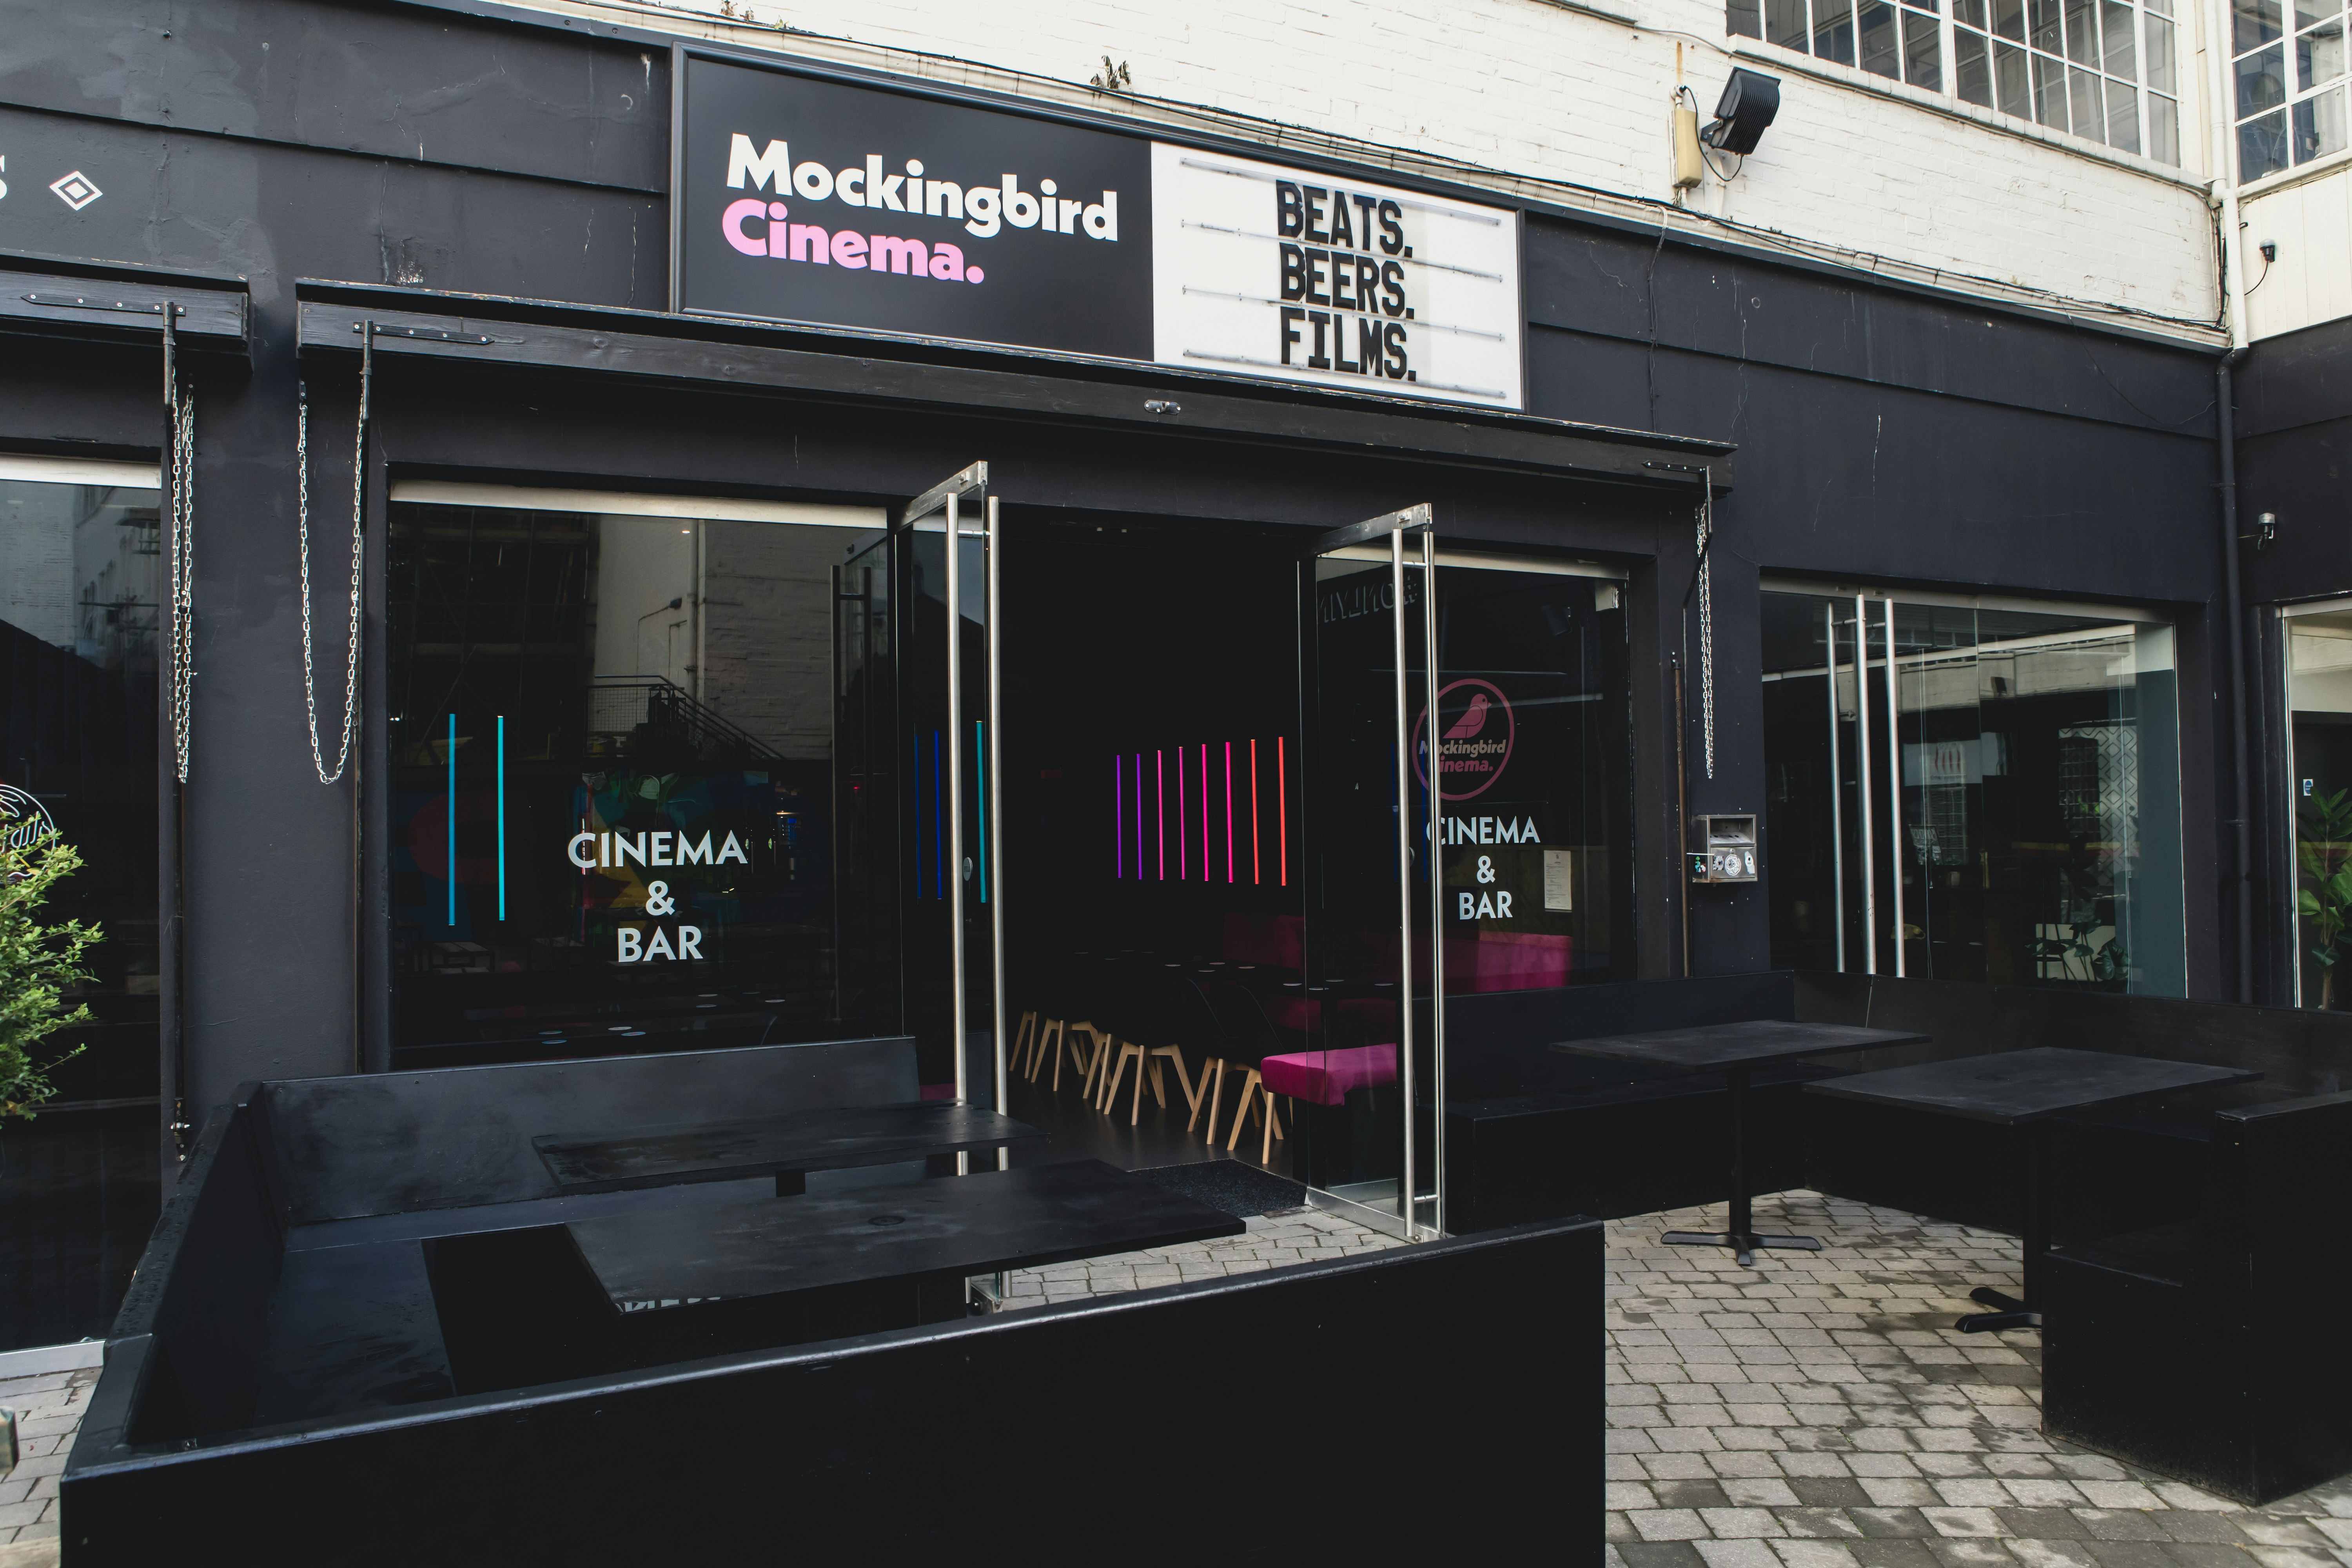 Bars Venues in Birmingham - The Mockingbird Cinema and Sobremesa Bar